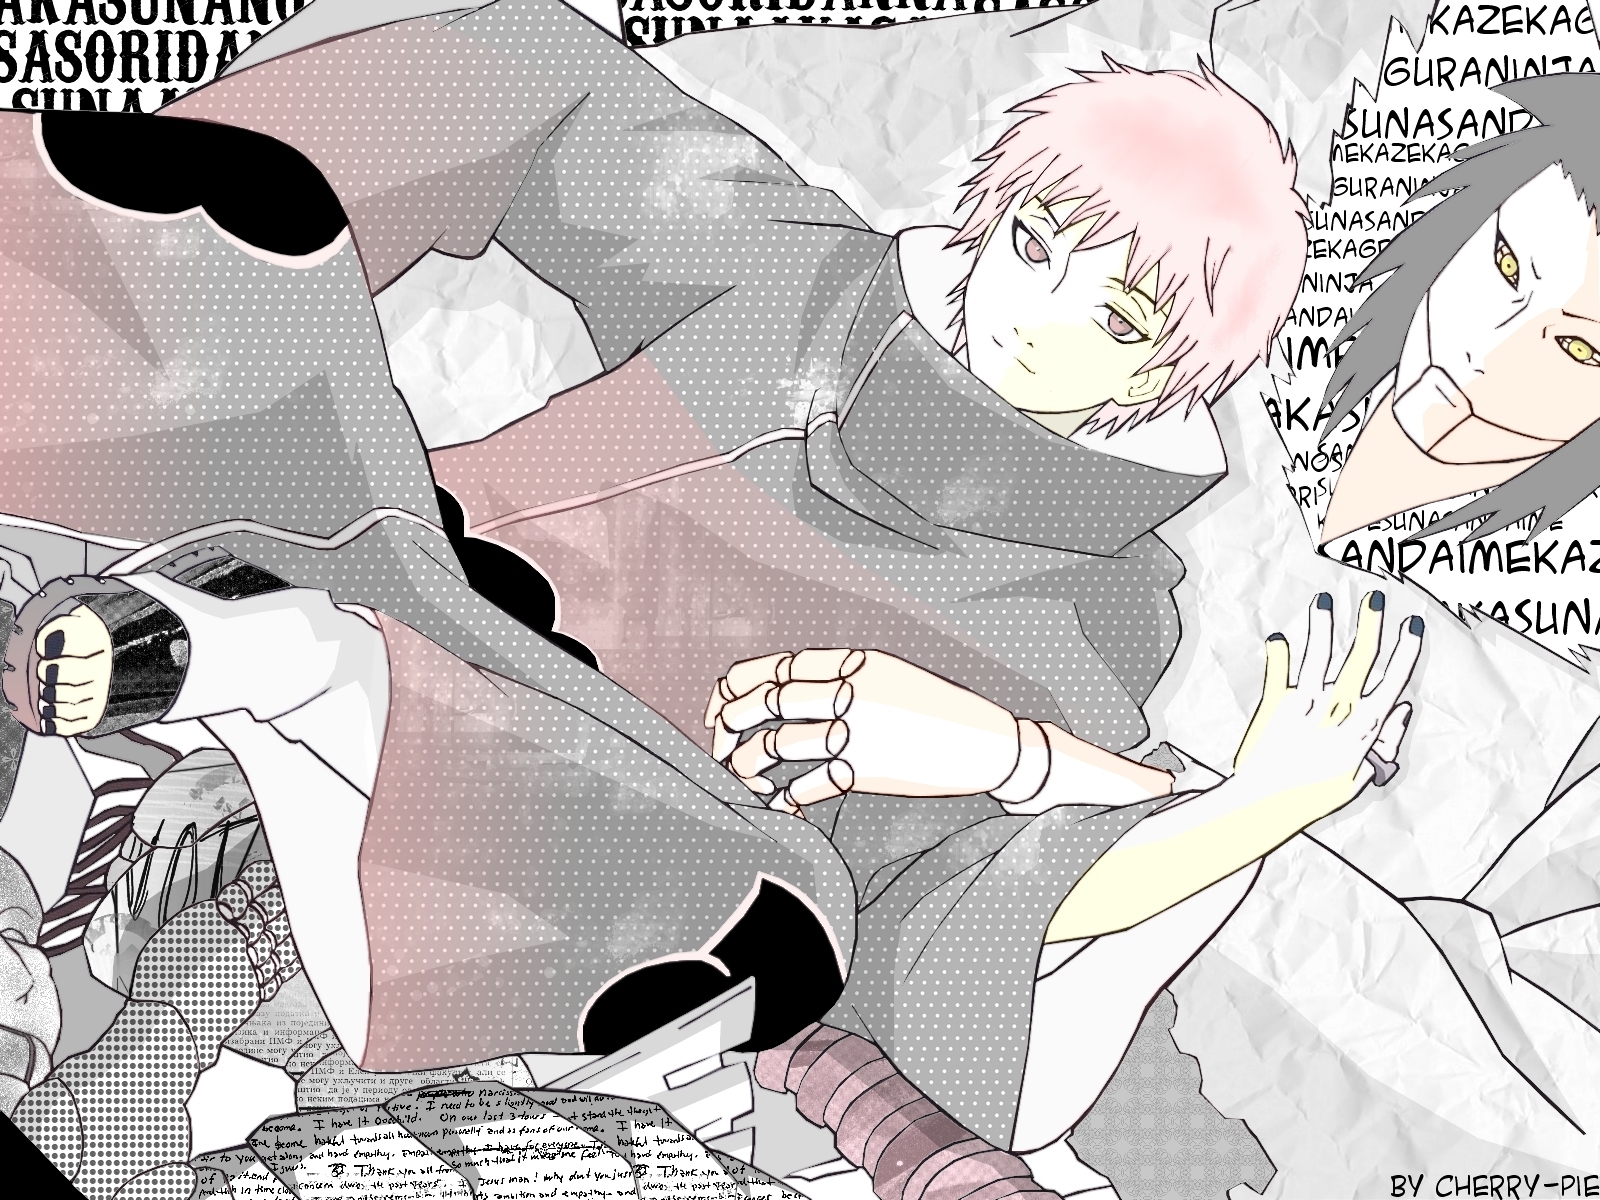 Sasori, character from Naruto, in HD desktop wallpaper.